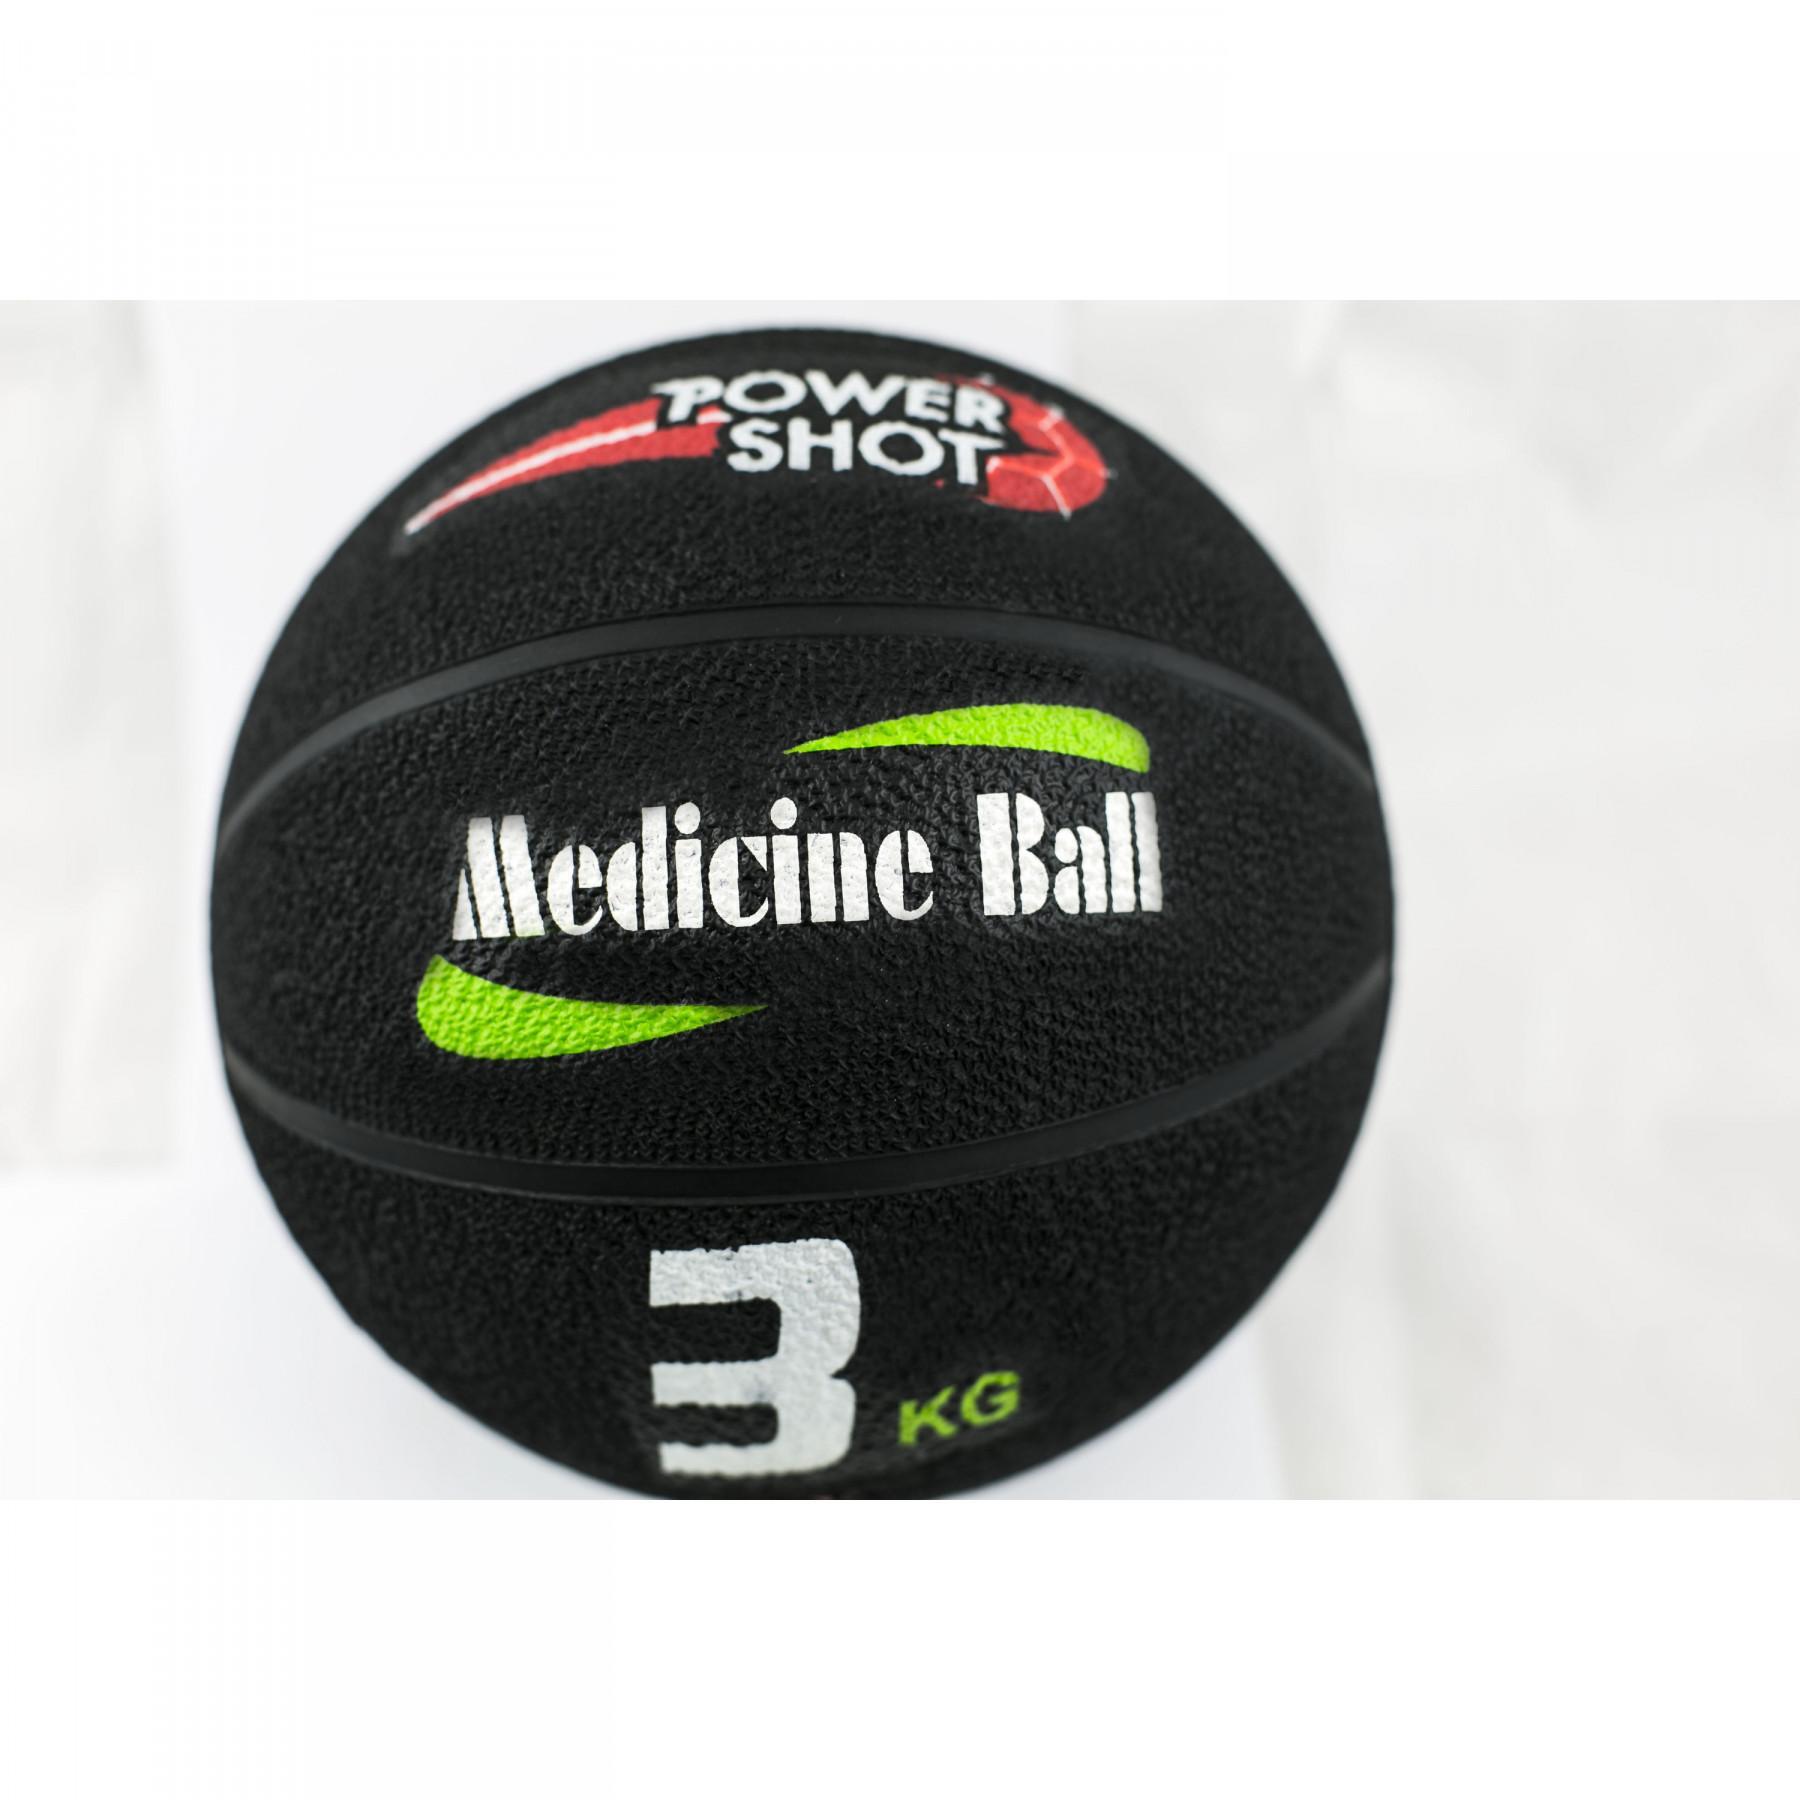 Medecine ball - 5kg PowerShot